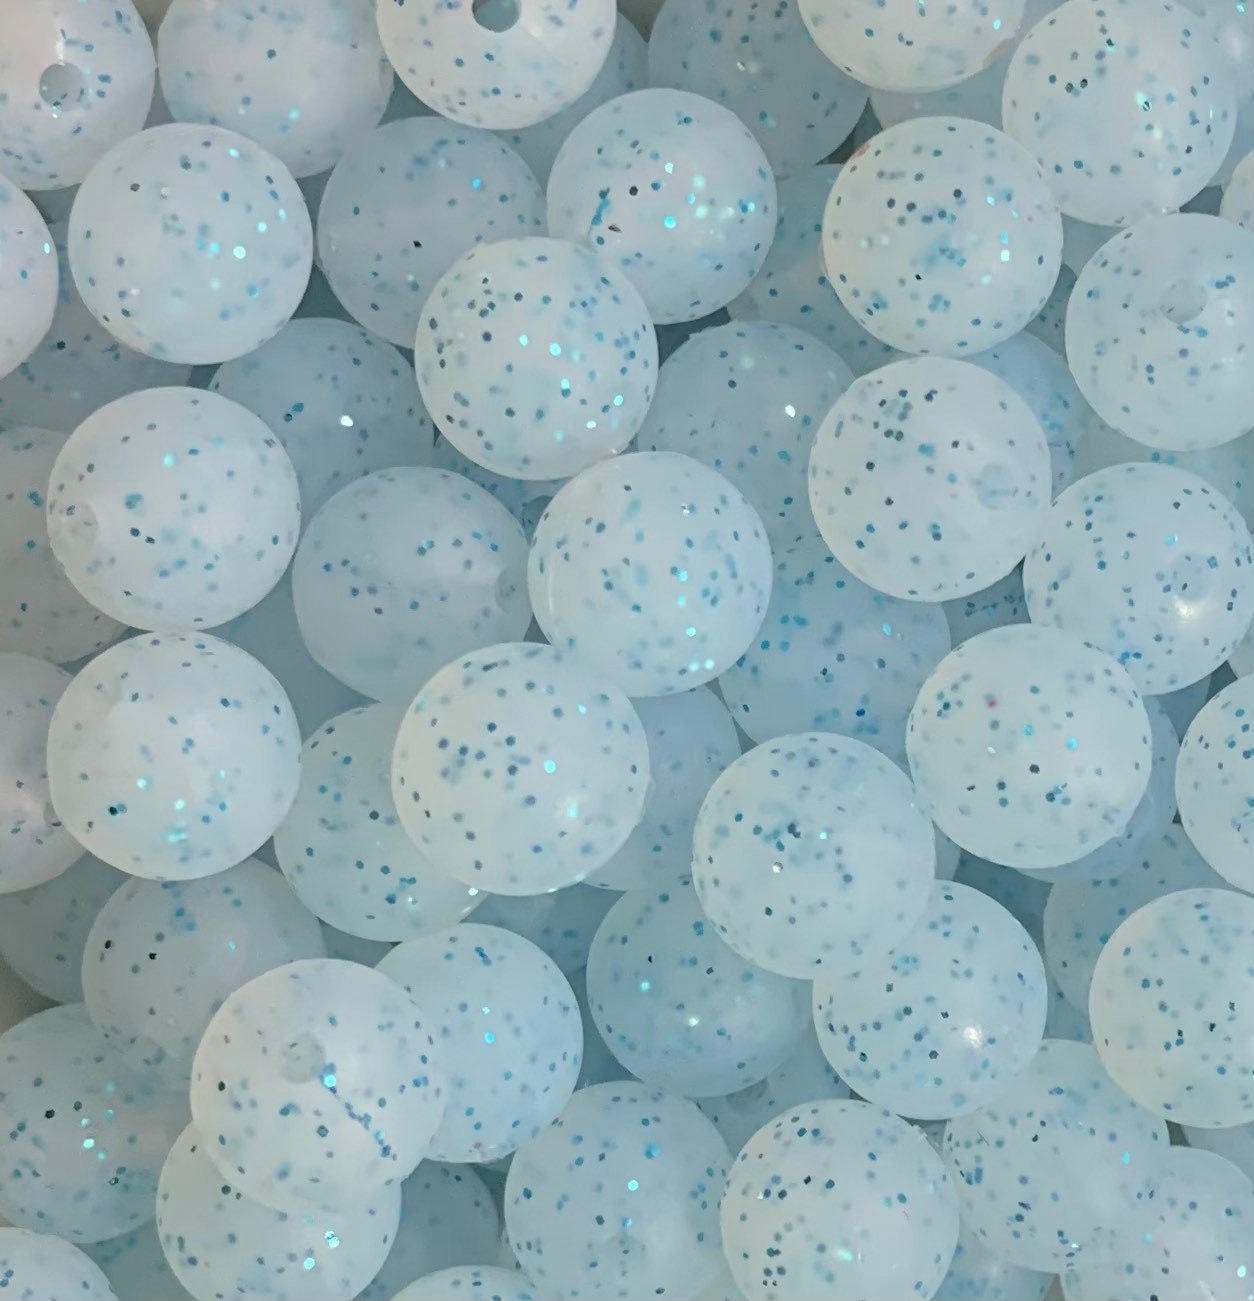 12mm Round Blue Glitter Silicone Beads